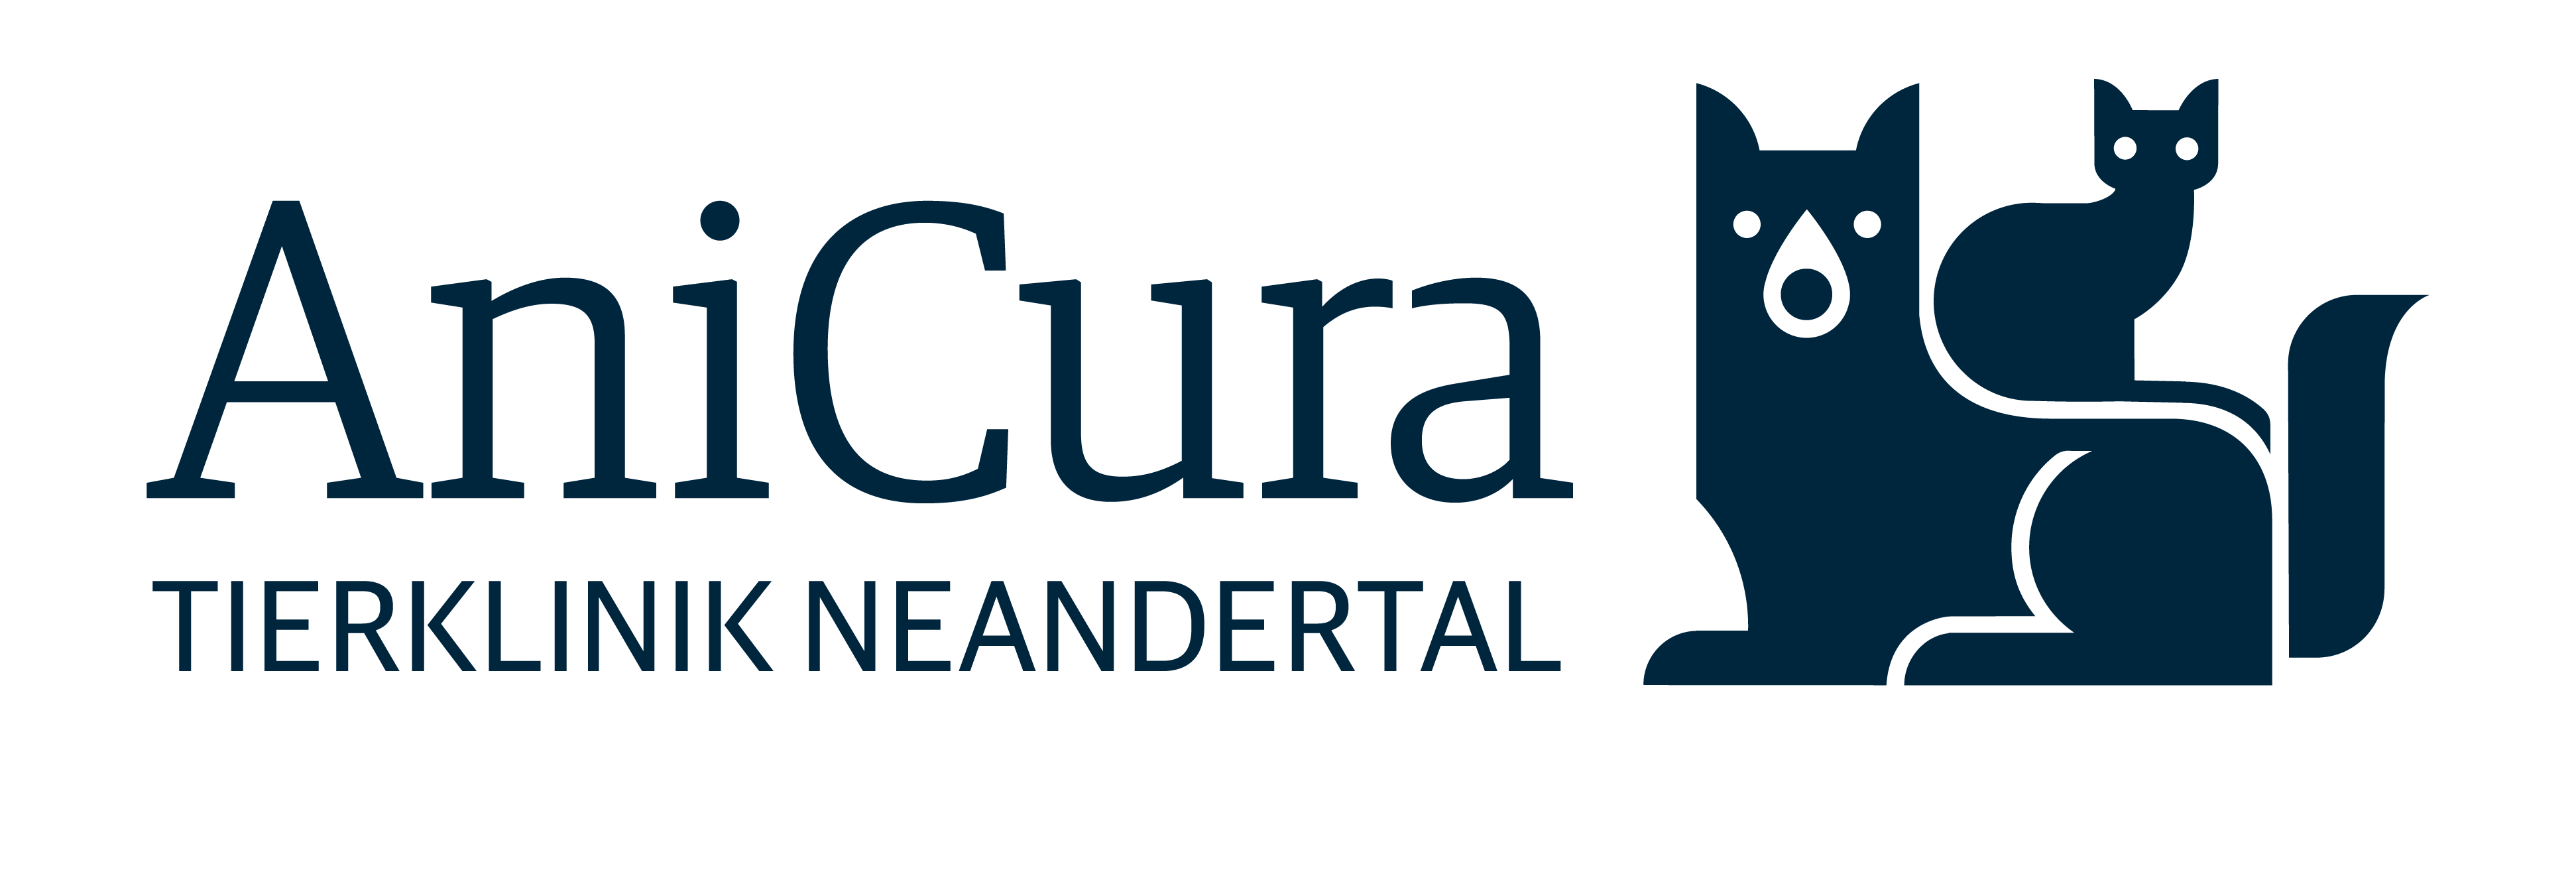 Tierklinik Neandertal logo